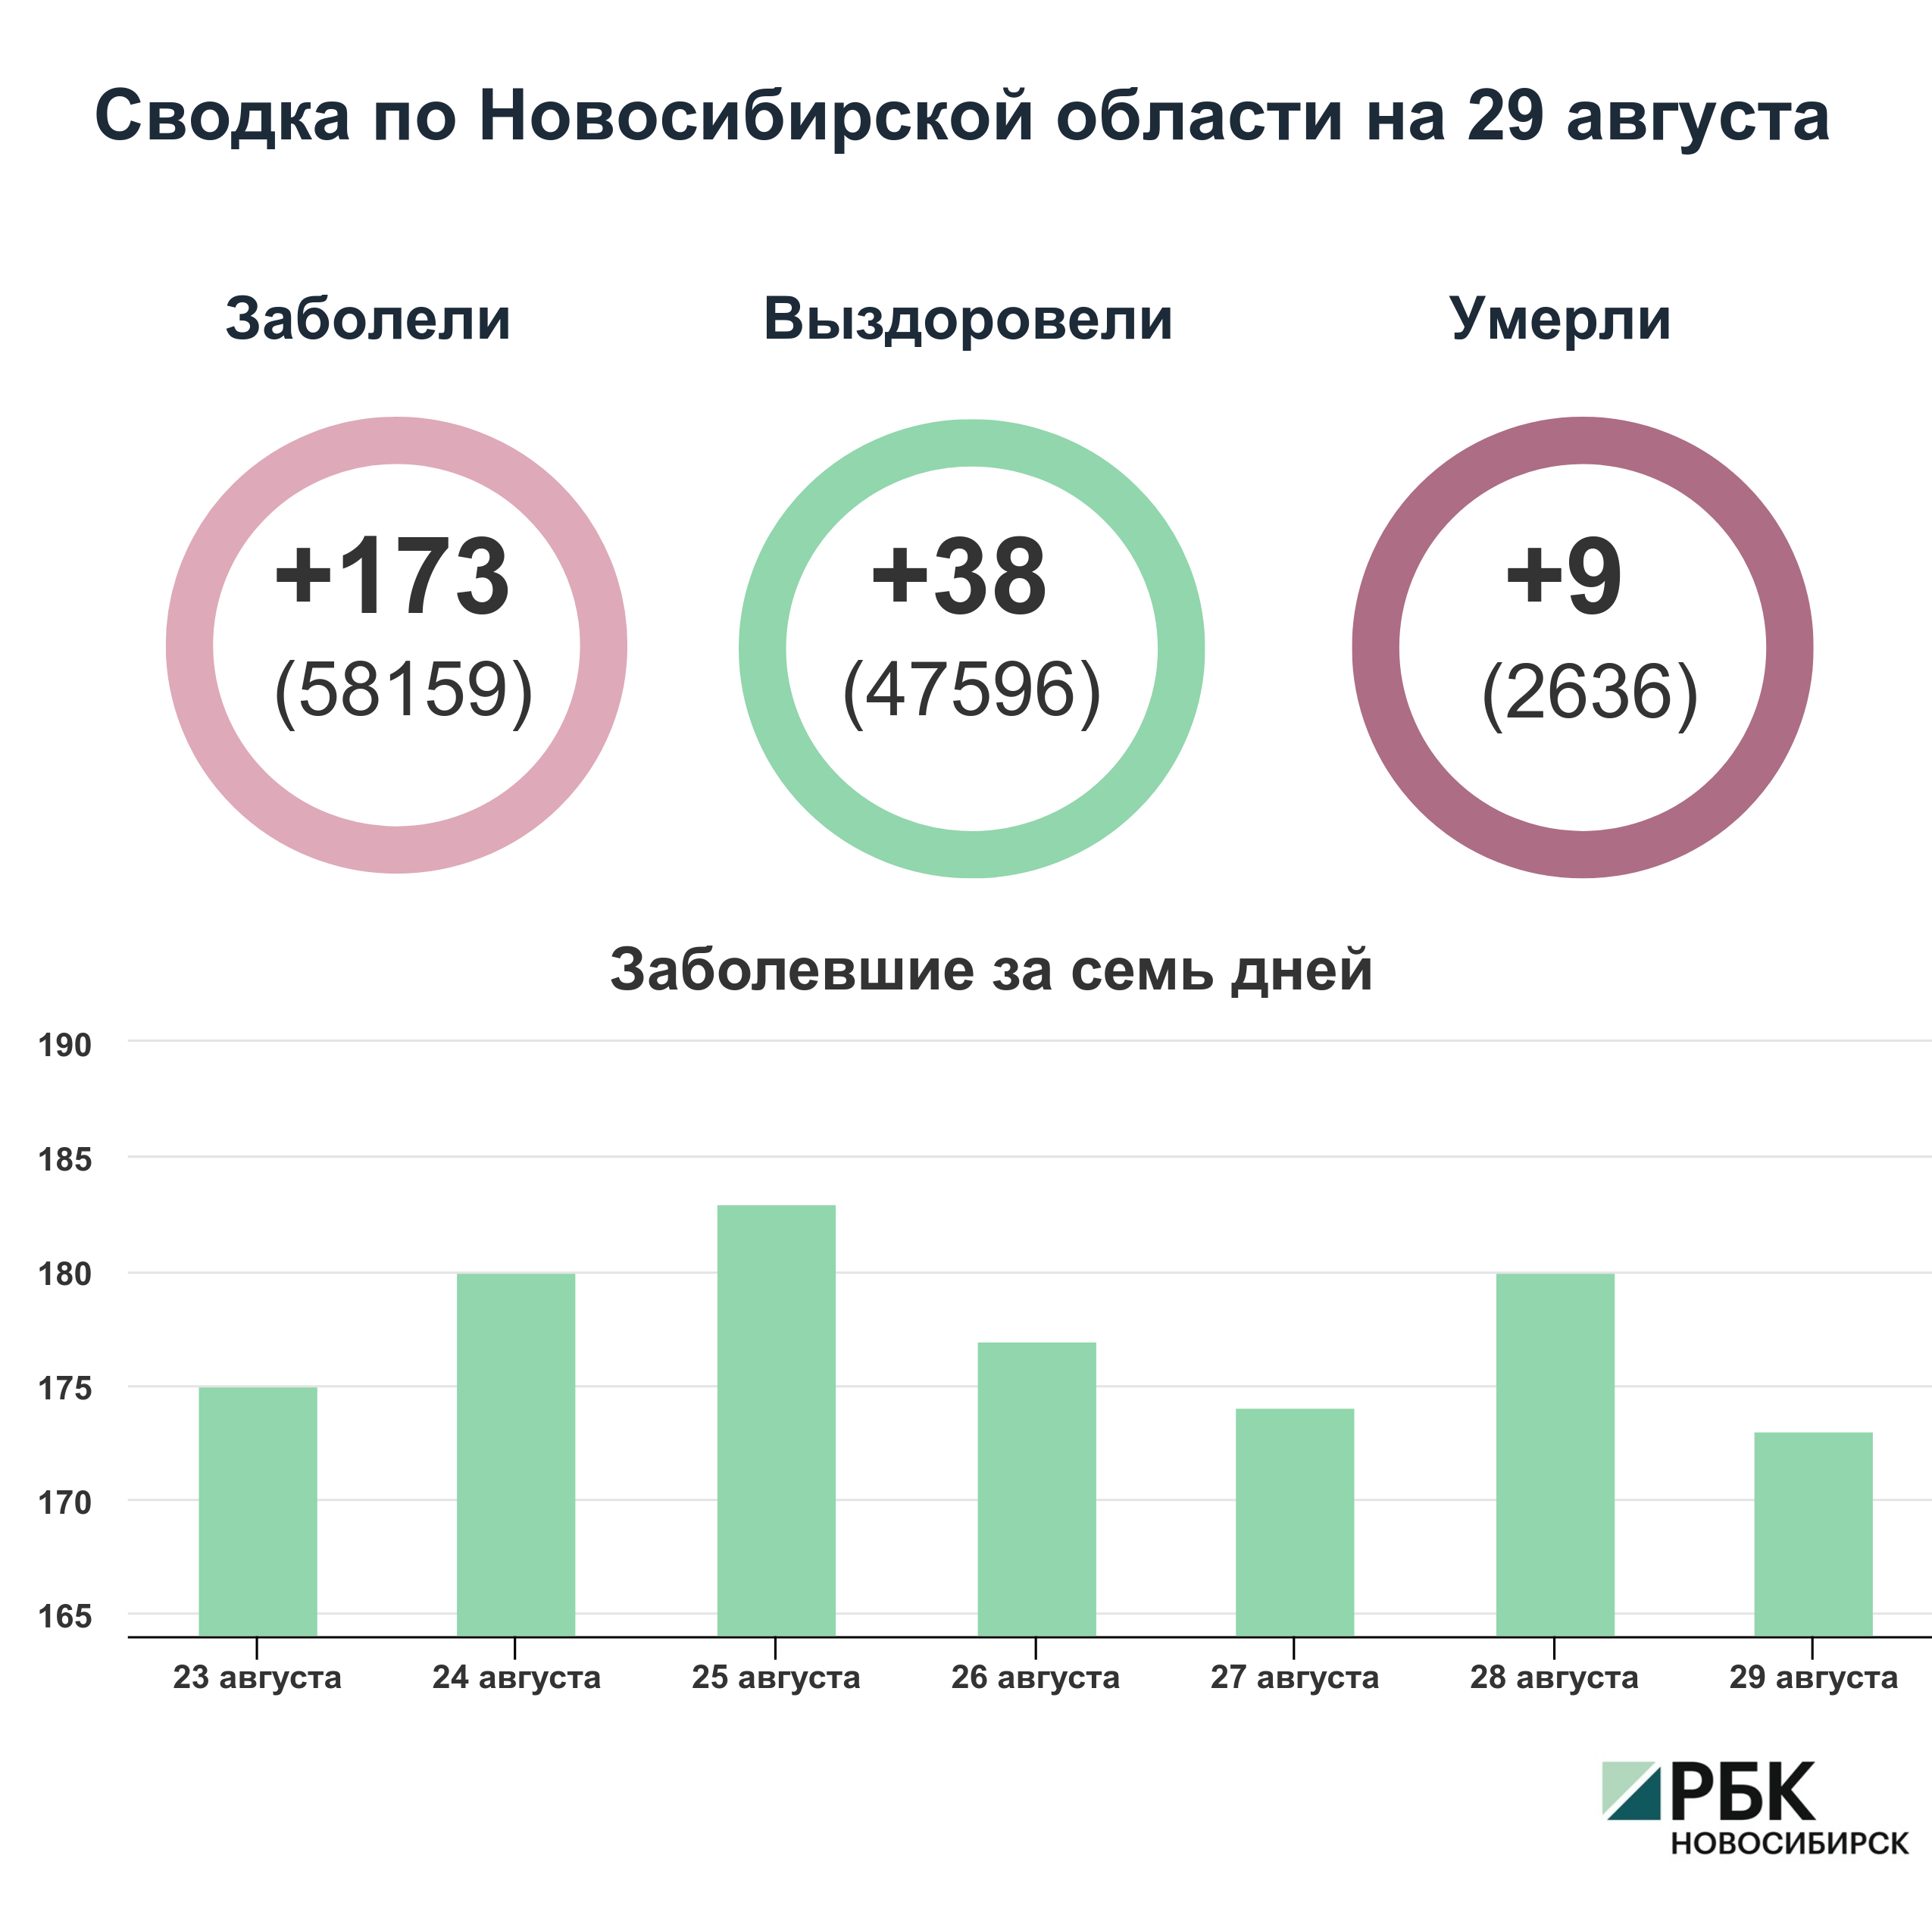 Коронавирус в Новосибирске: сводка на 29 августа